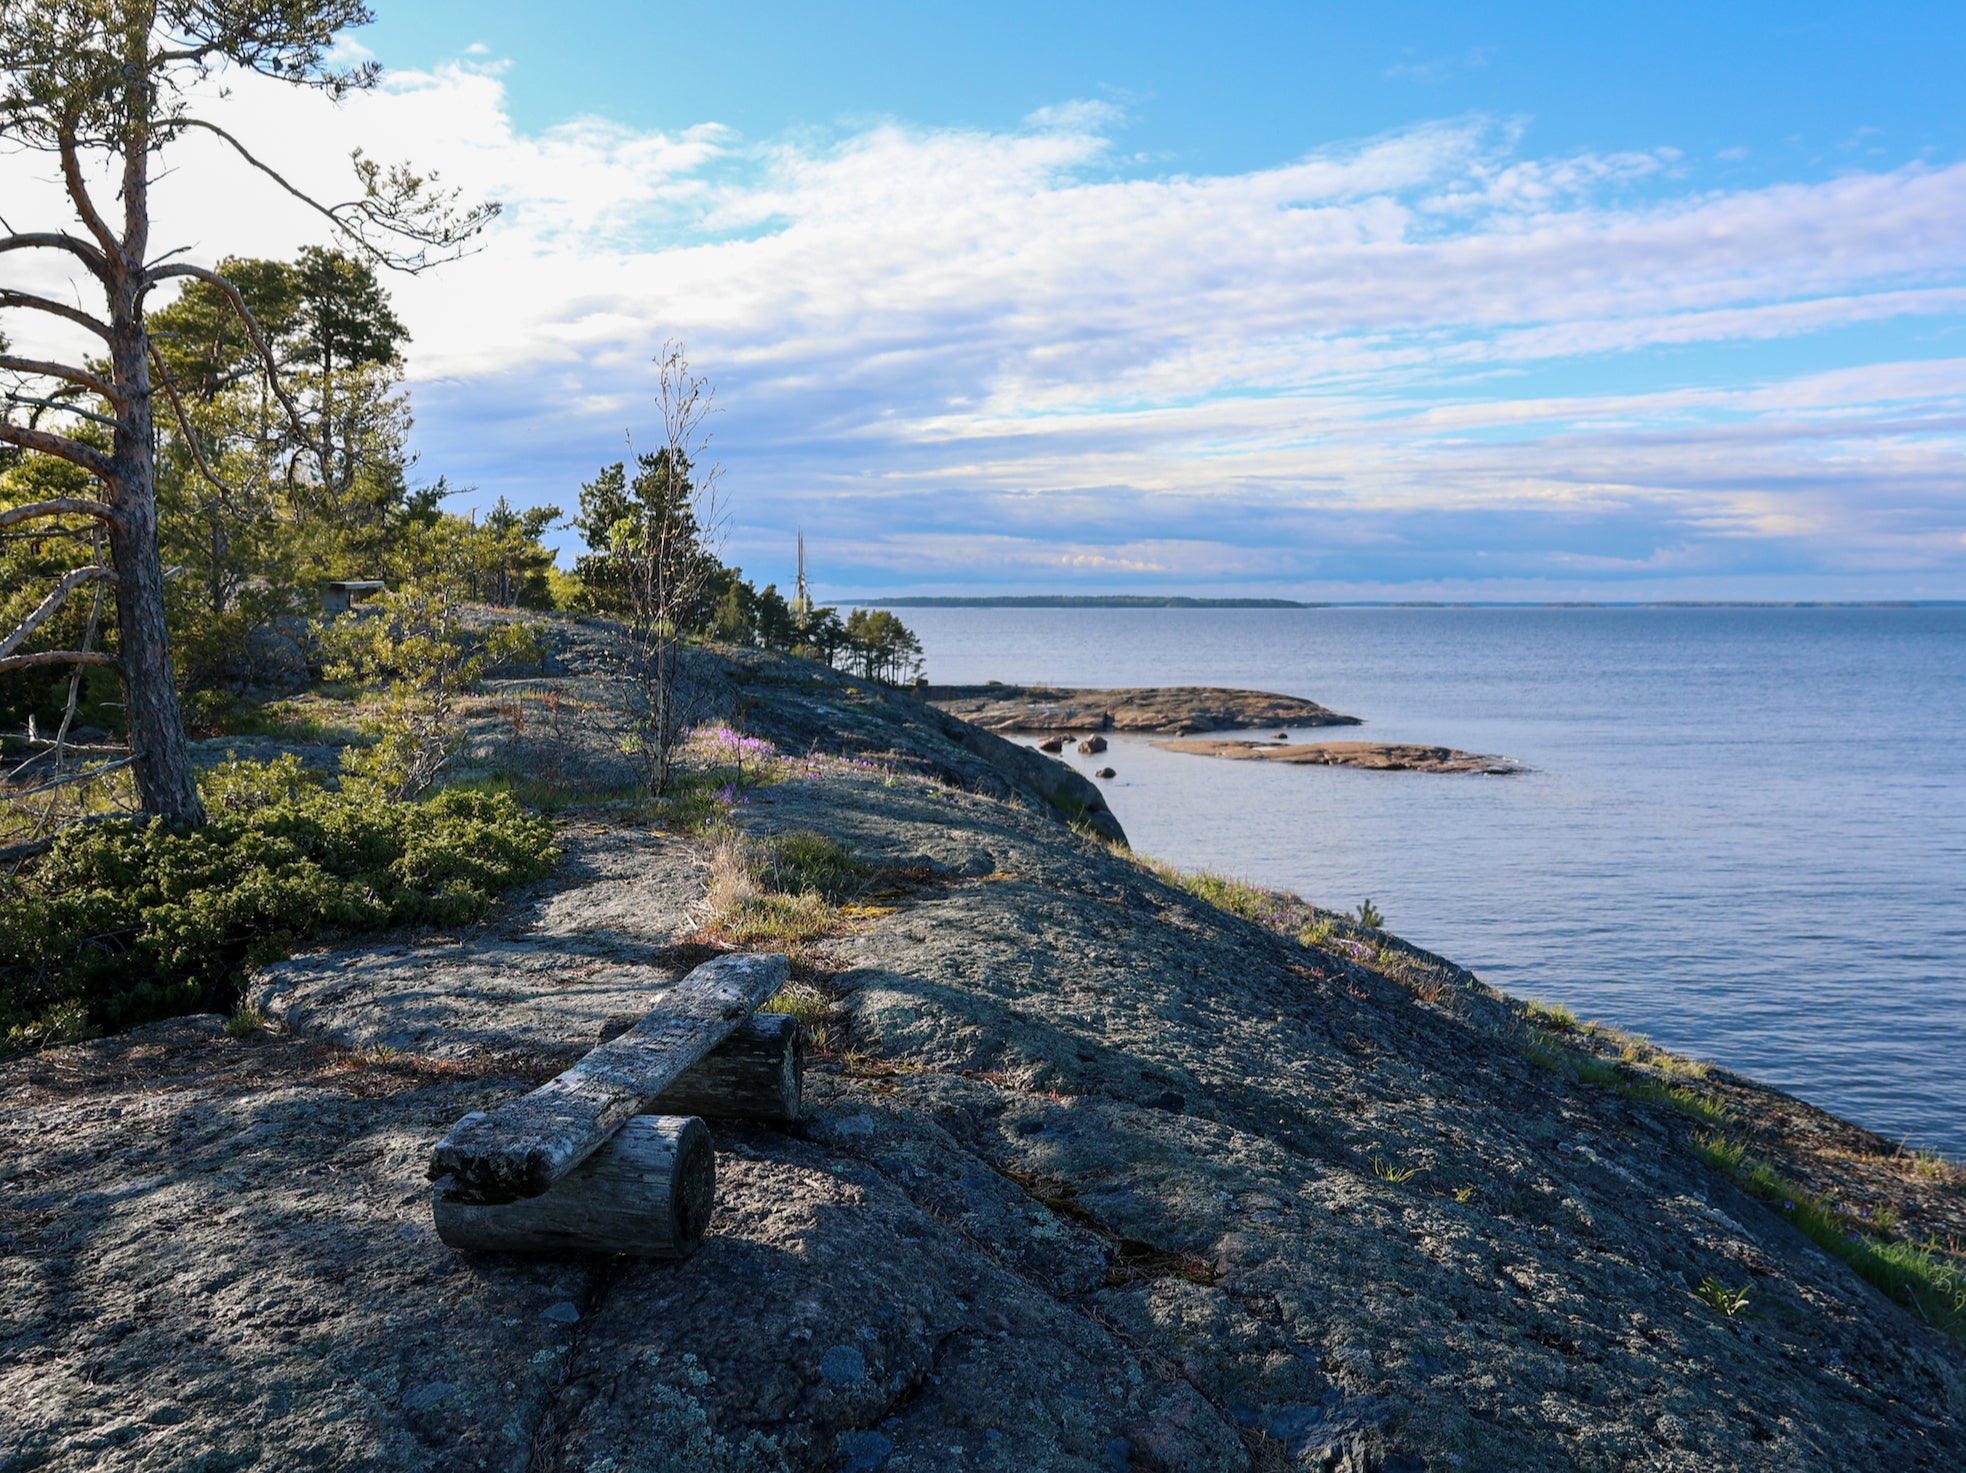 Ulko-Tammio, Finland’s first ‘phone-free’ island